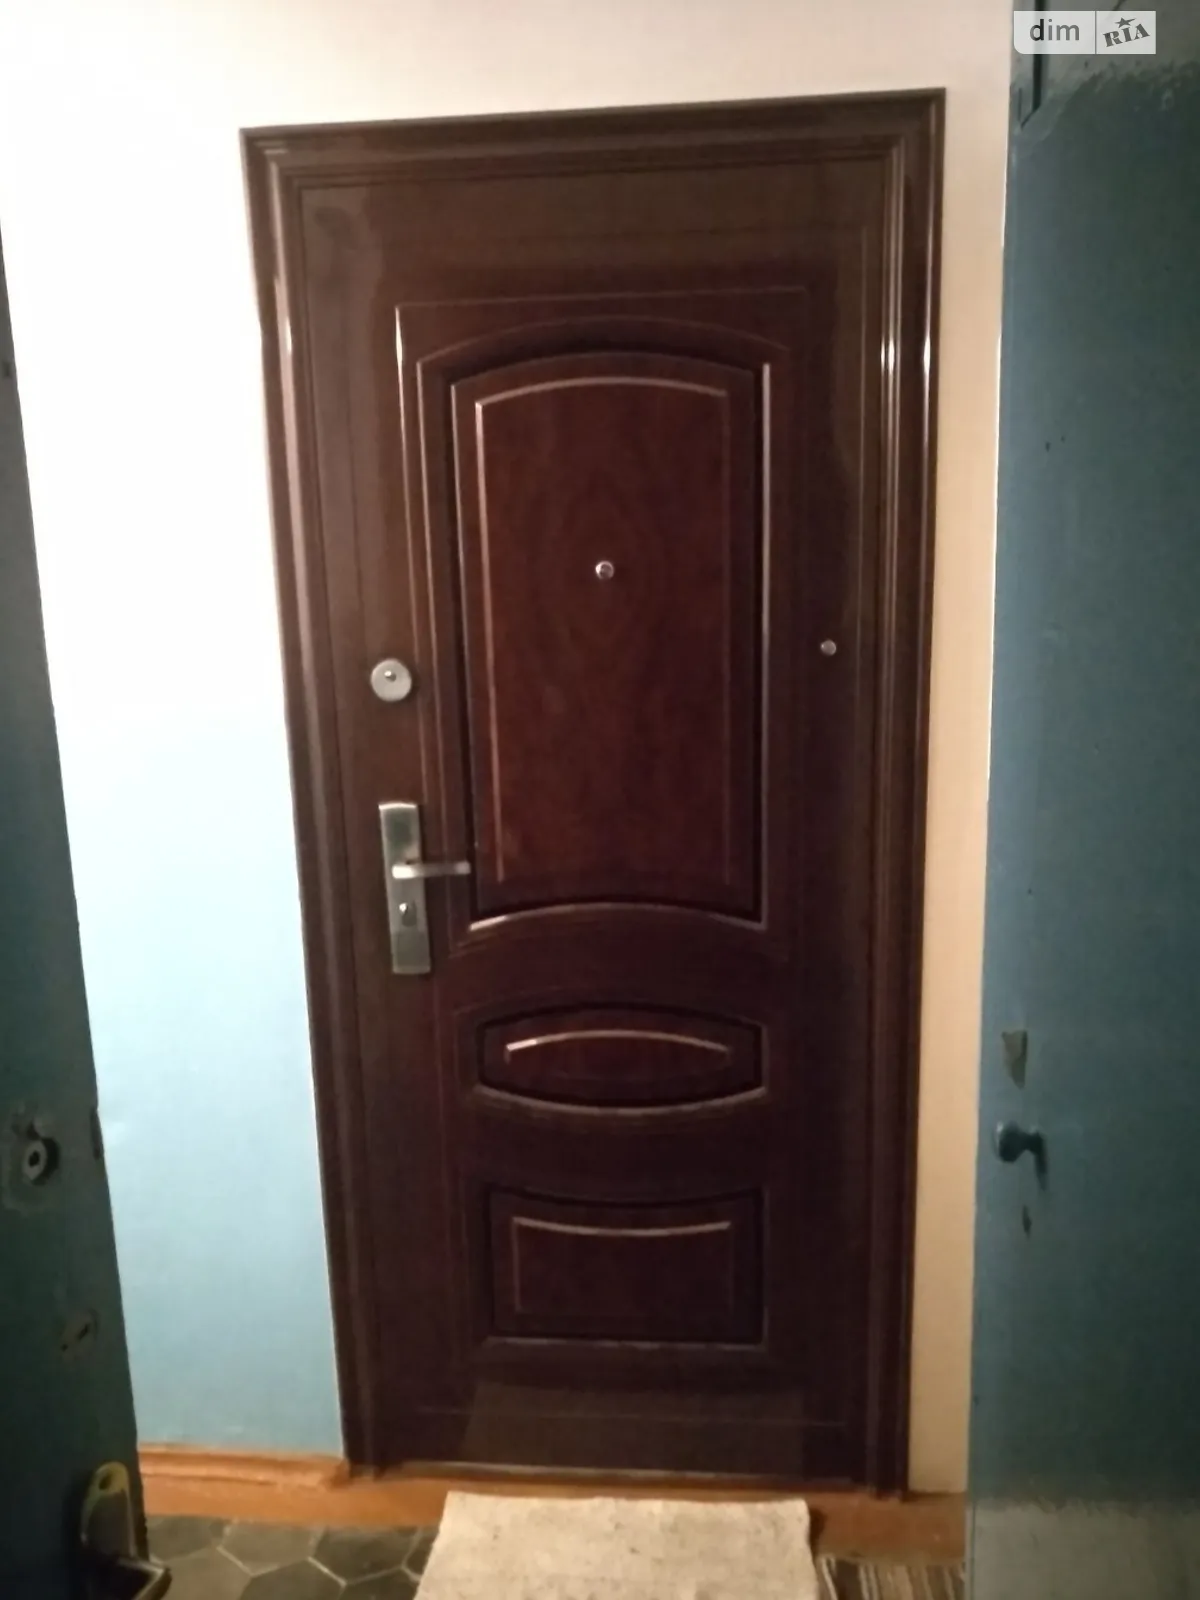 Продается комната 27 кв. м в Николаеве - фото 3